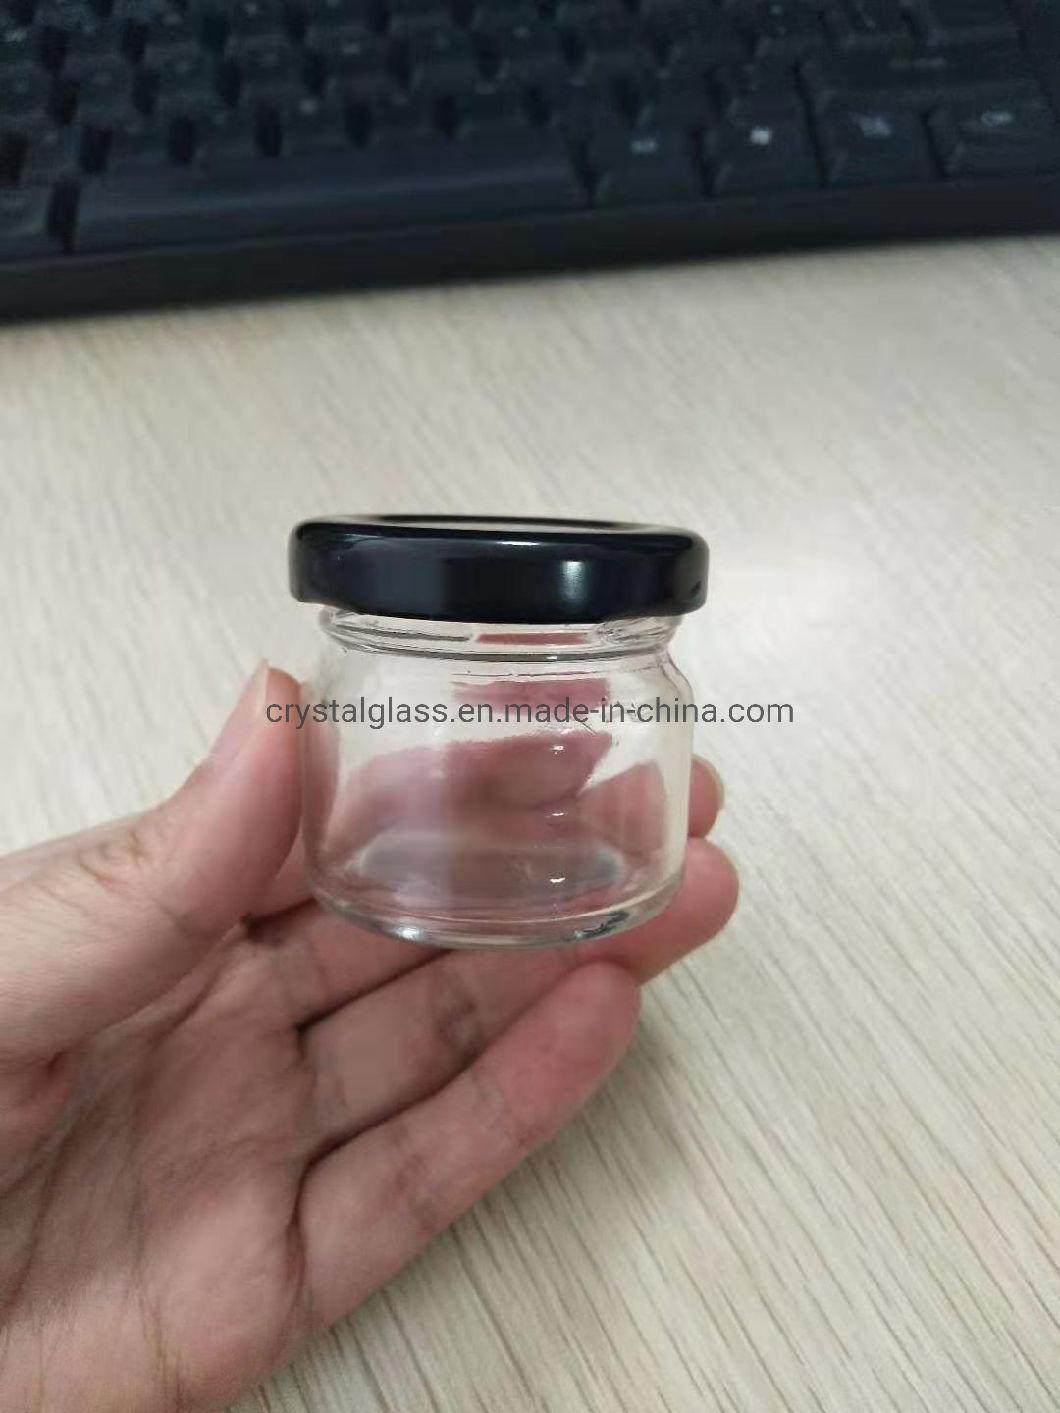 3oz Glass Mini Jar for Honey Jam Jelly or Bird Nest Jar with Lid